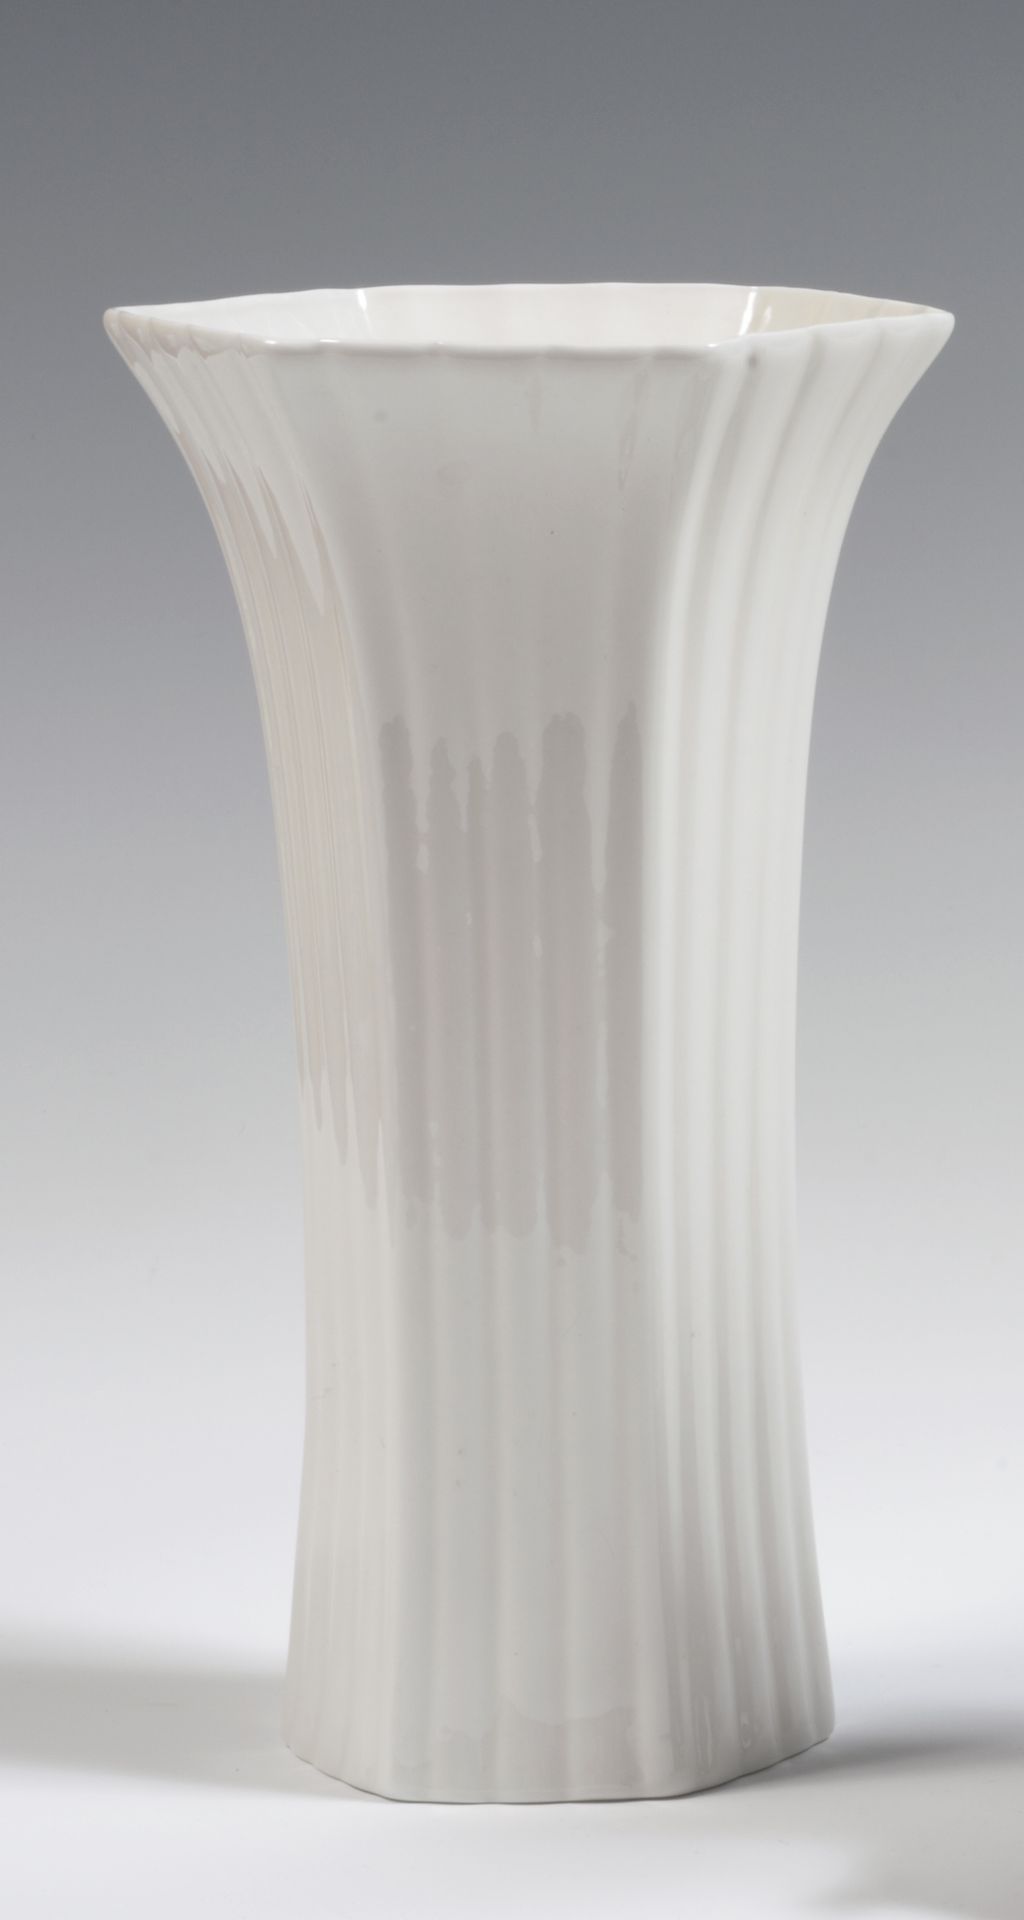 Null 
英国

一对白瓷六边形花瓶，有凸起的凹槽。

20世纪。

H.20厘米。